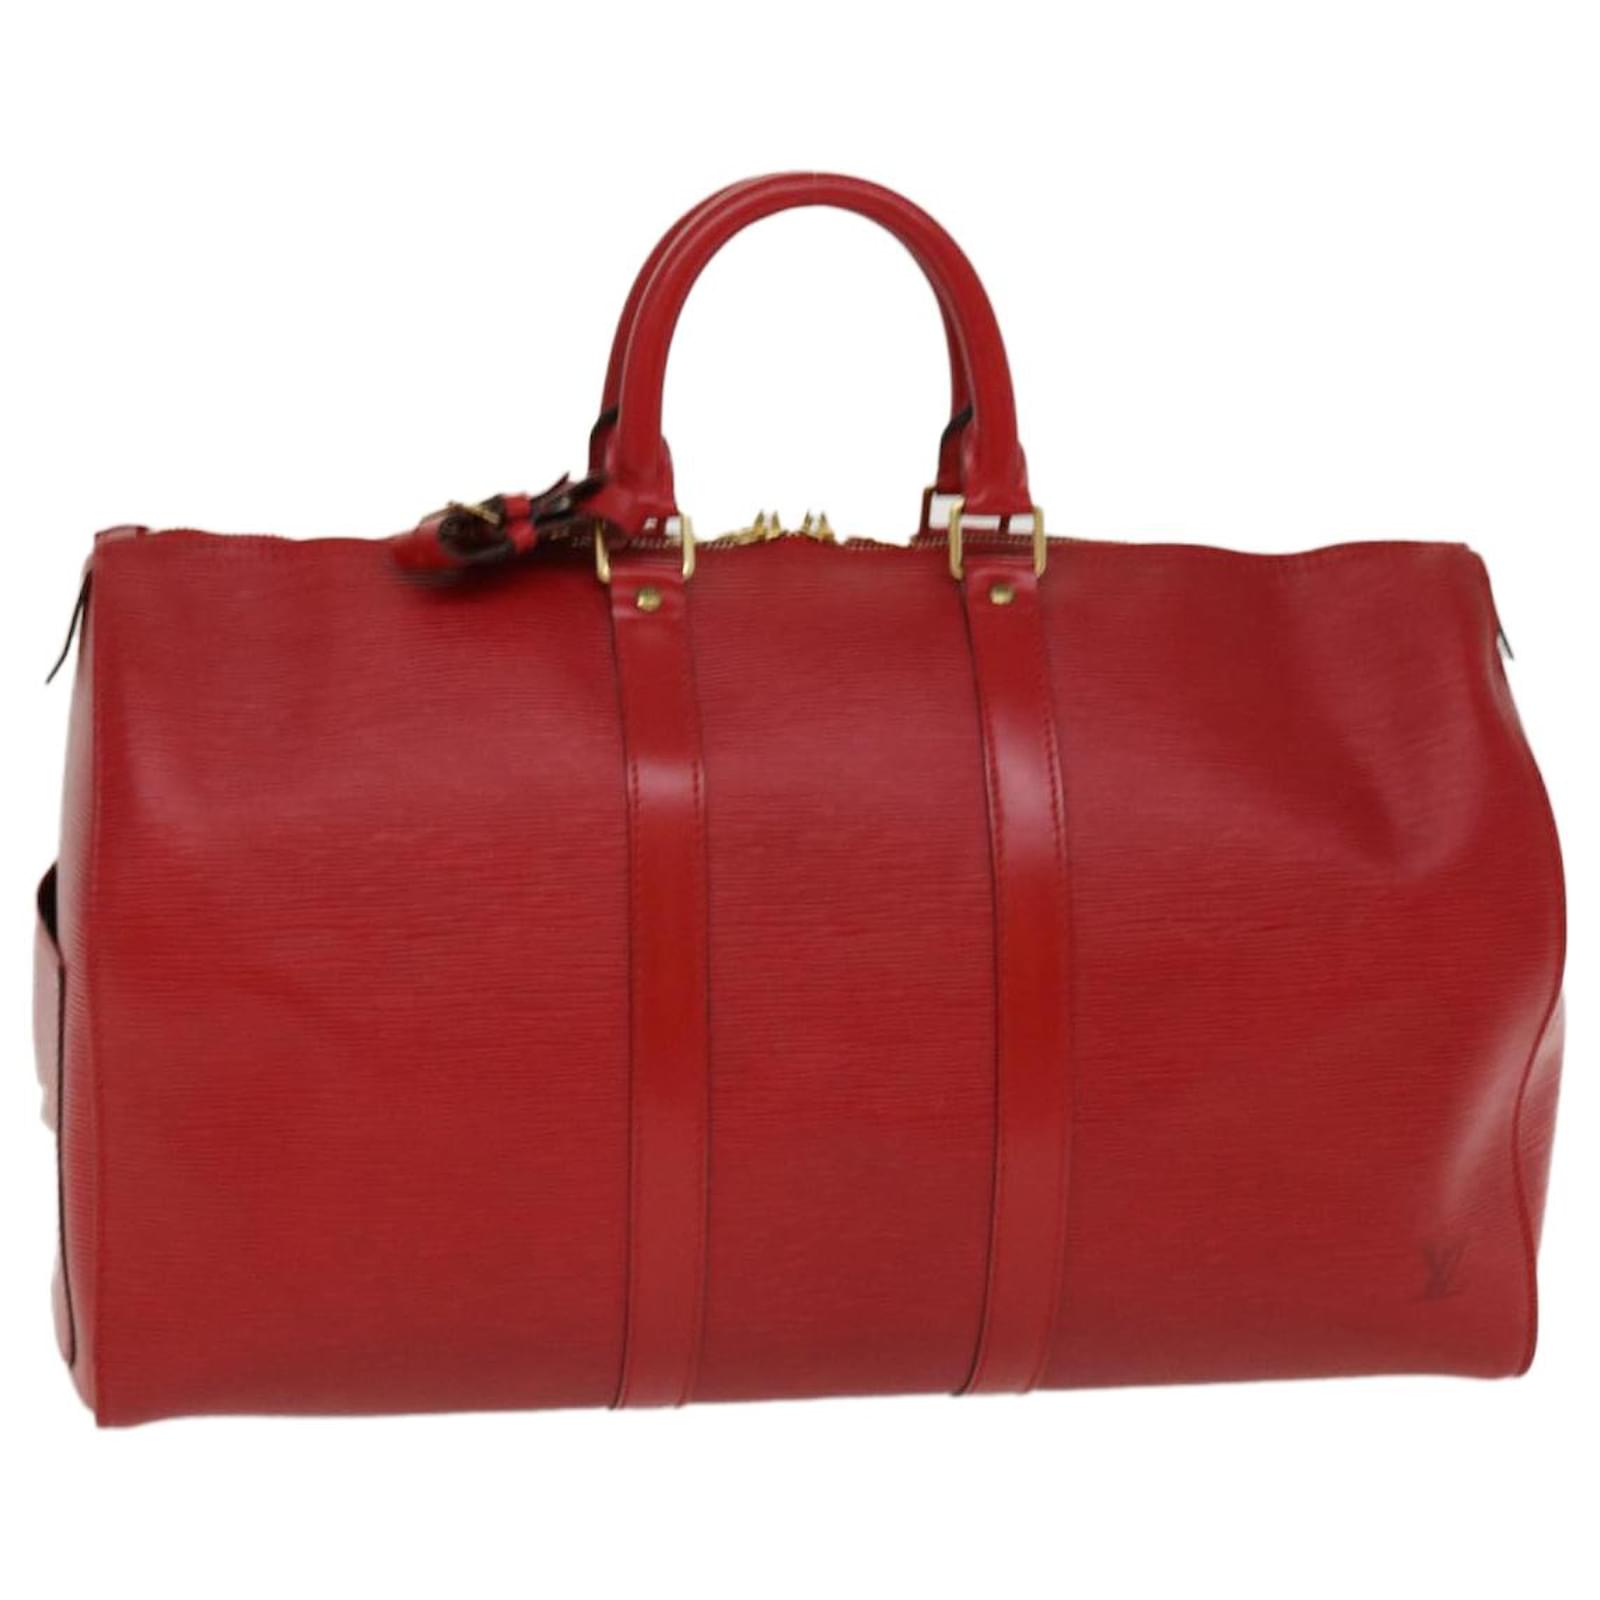 Epi Keepall 45 Weekend Bag - Louis Vuitton